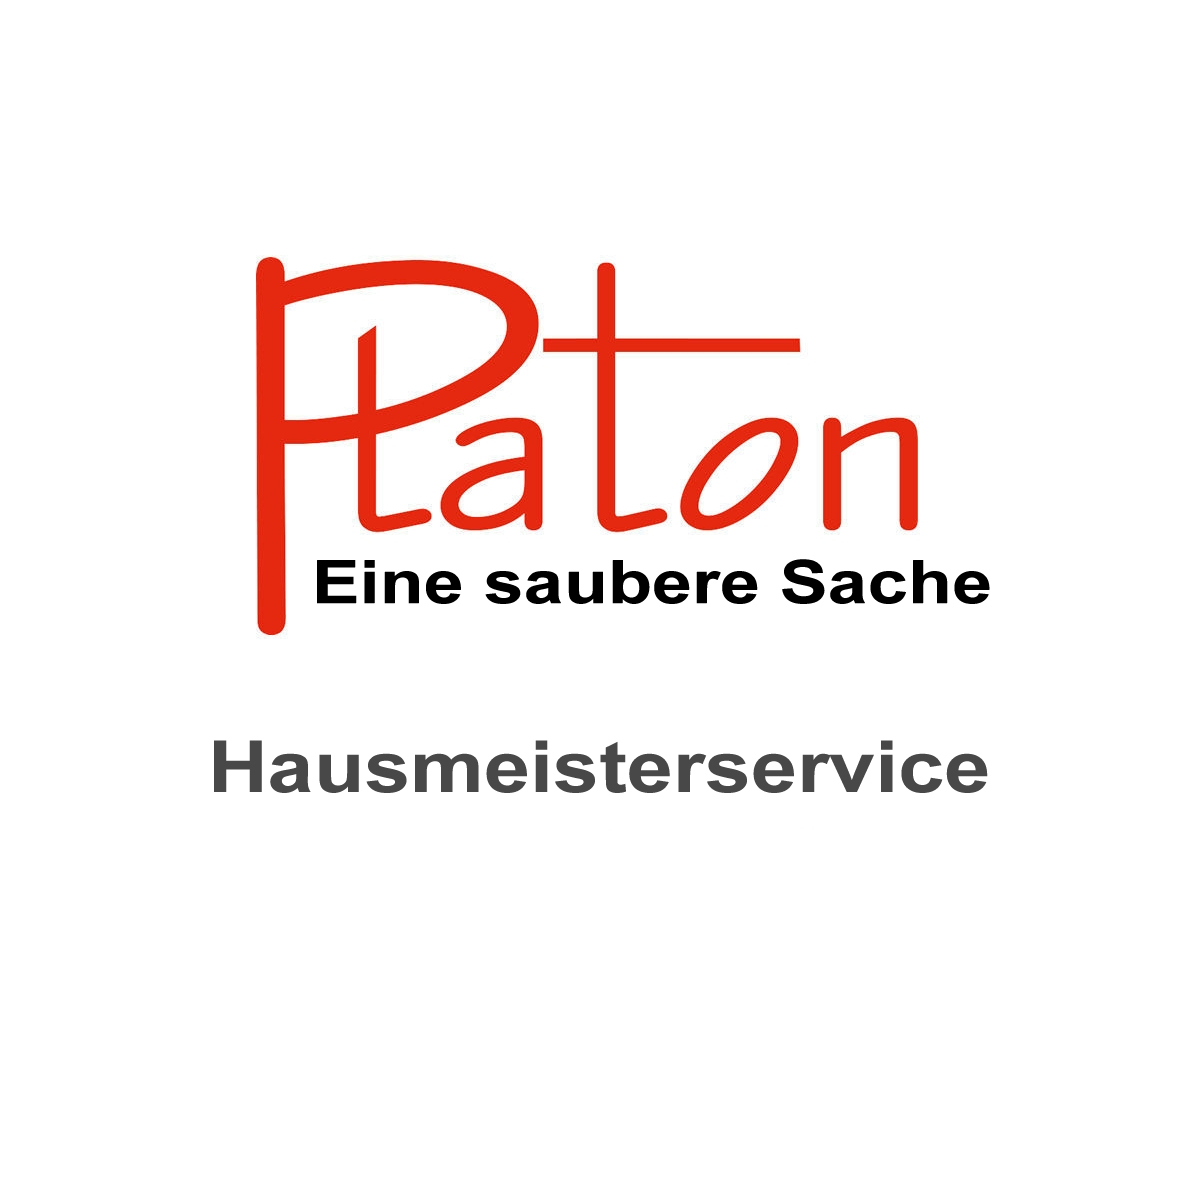 (c) Platon-hausmeisterservice.de